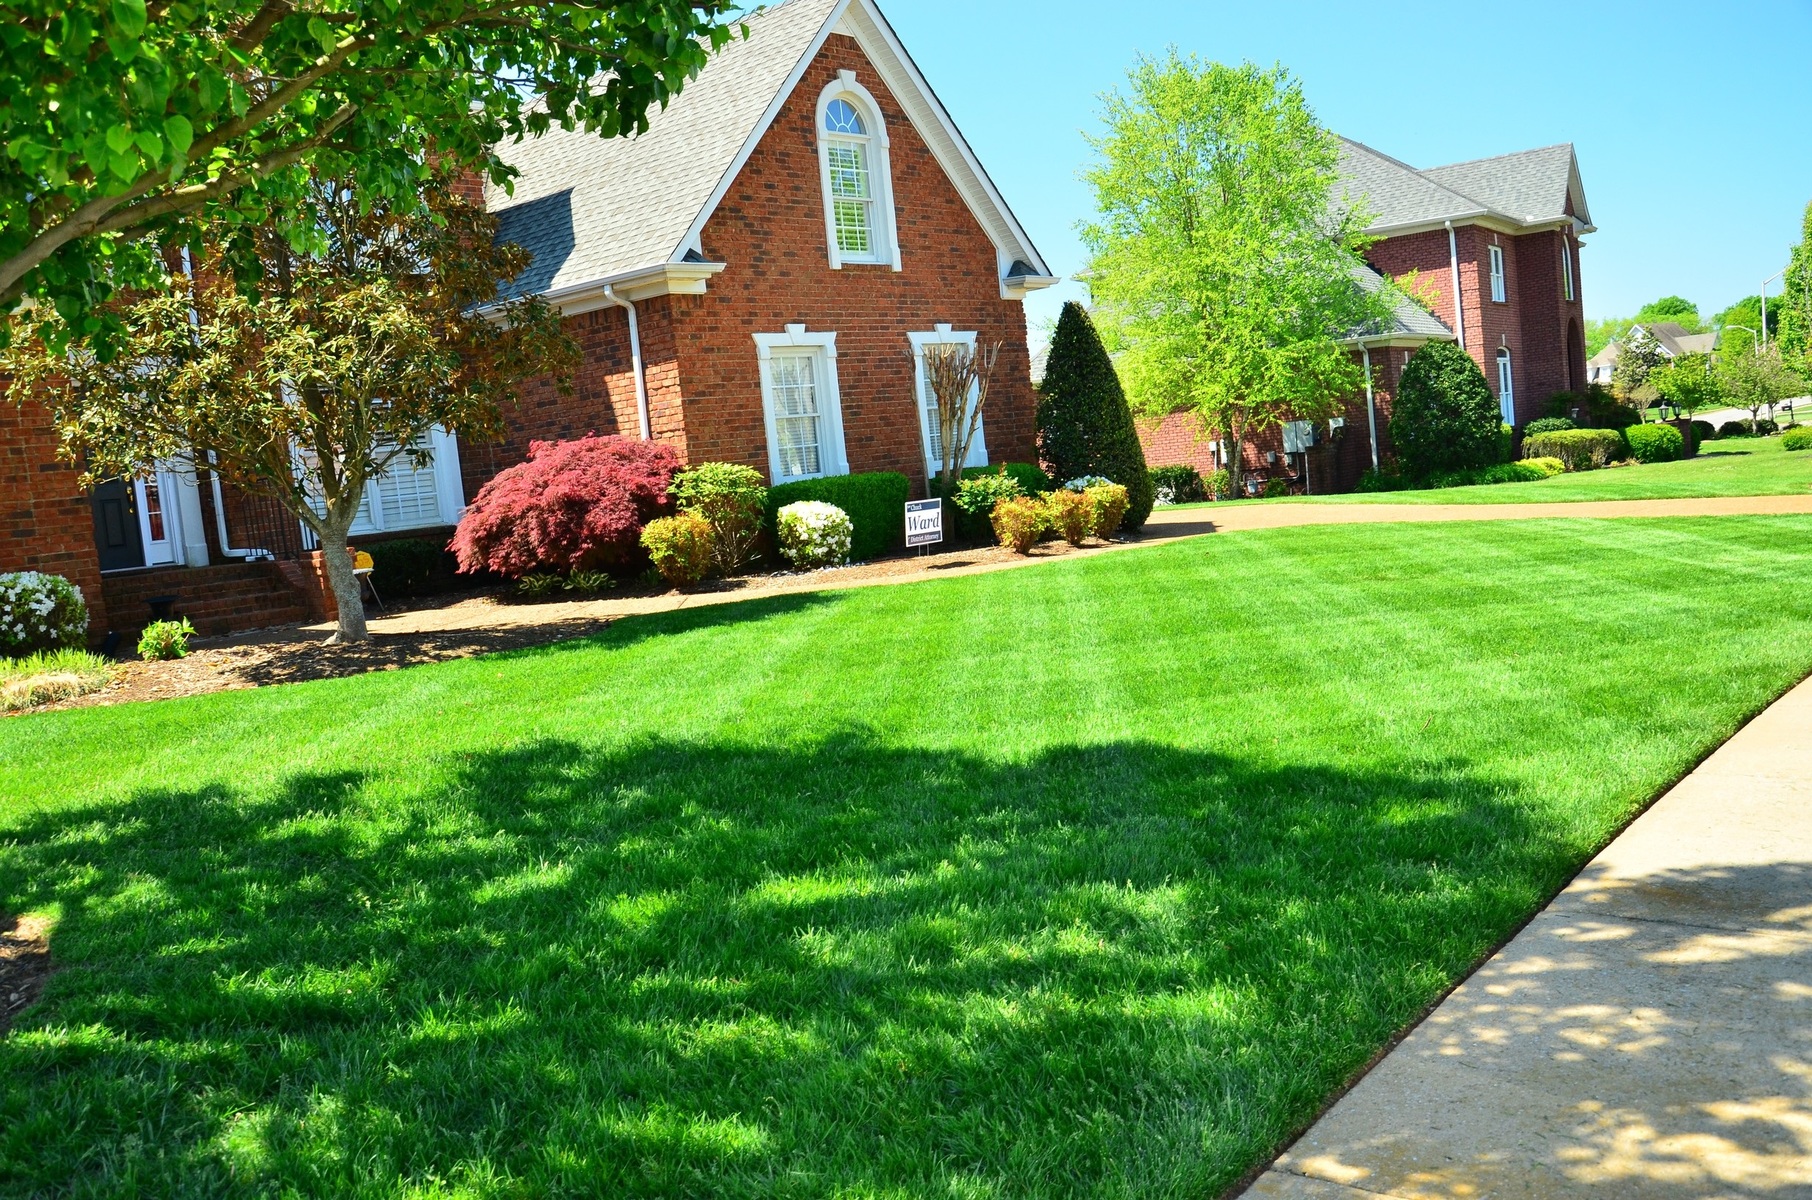 grass-lawn-flower-home-backyard-property-754952-pxhere.com